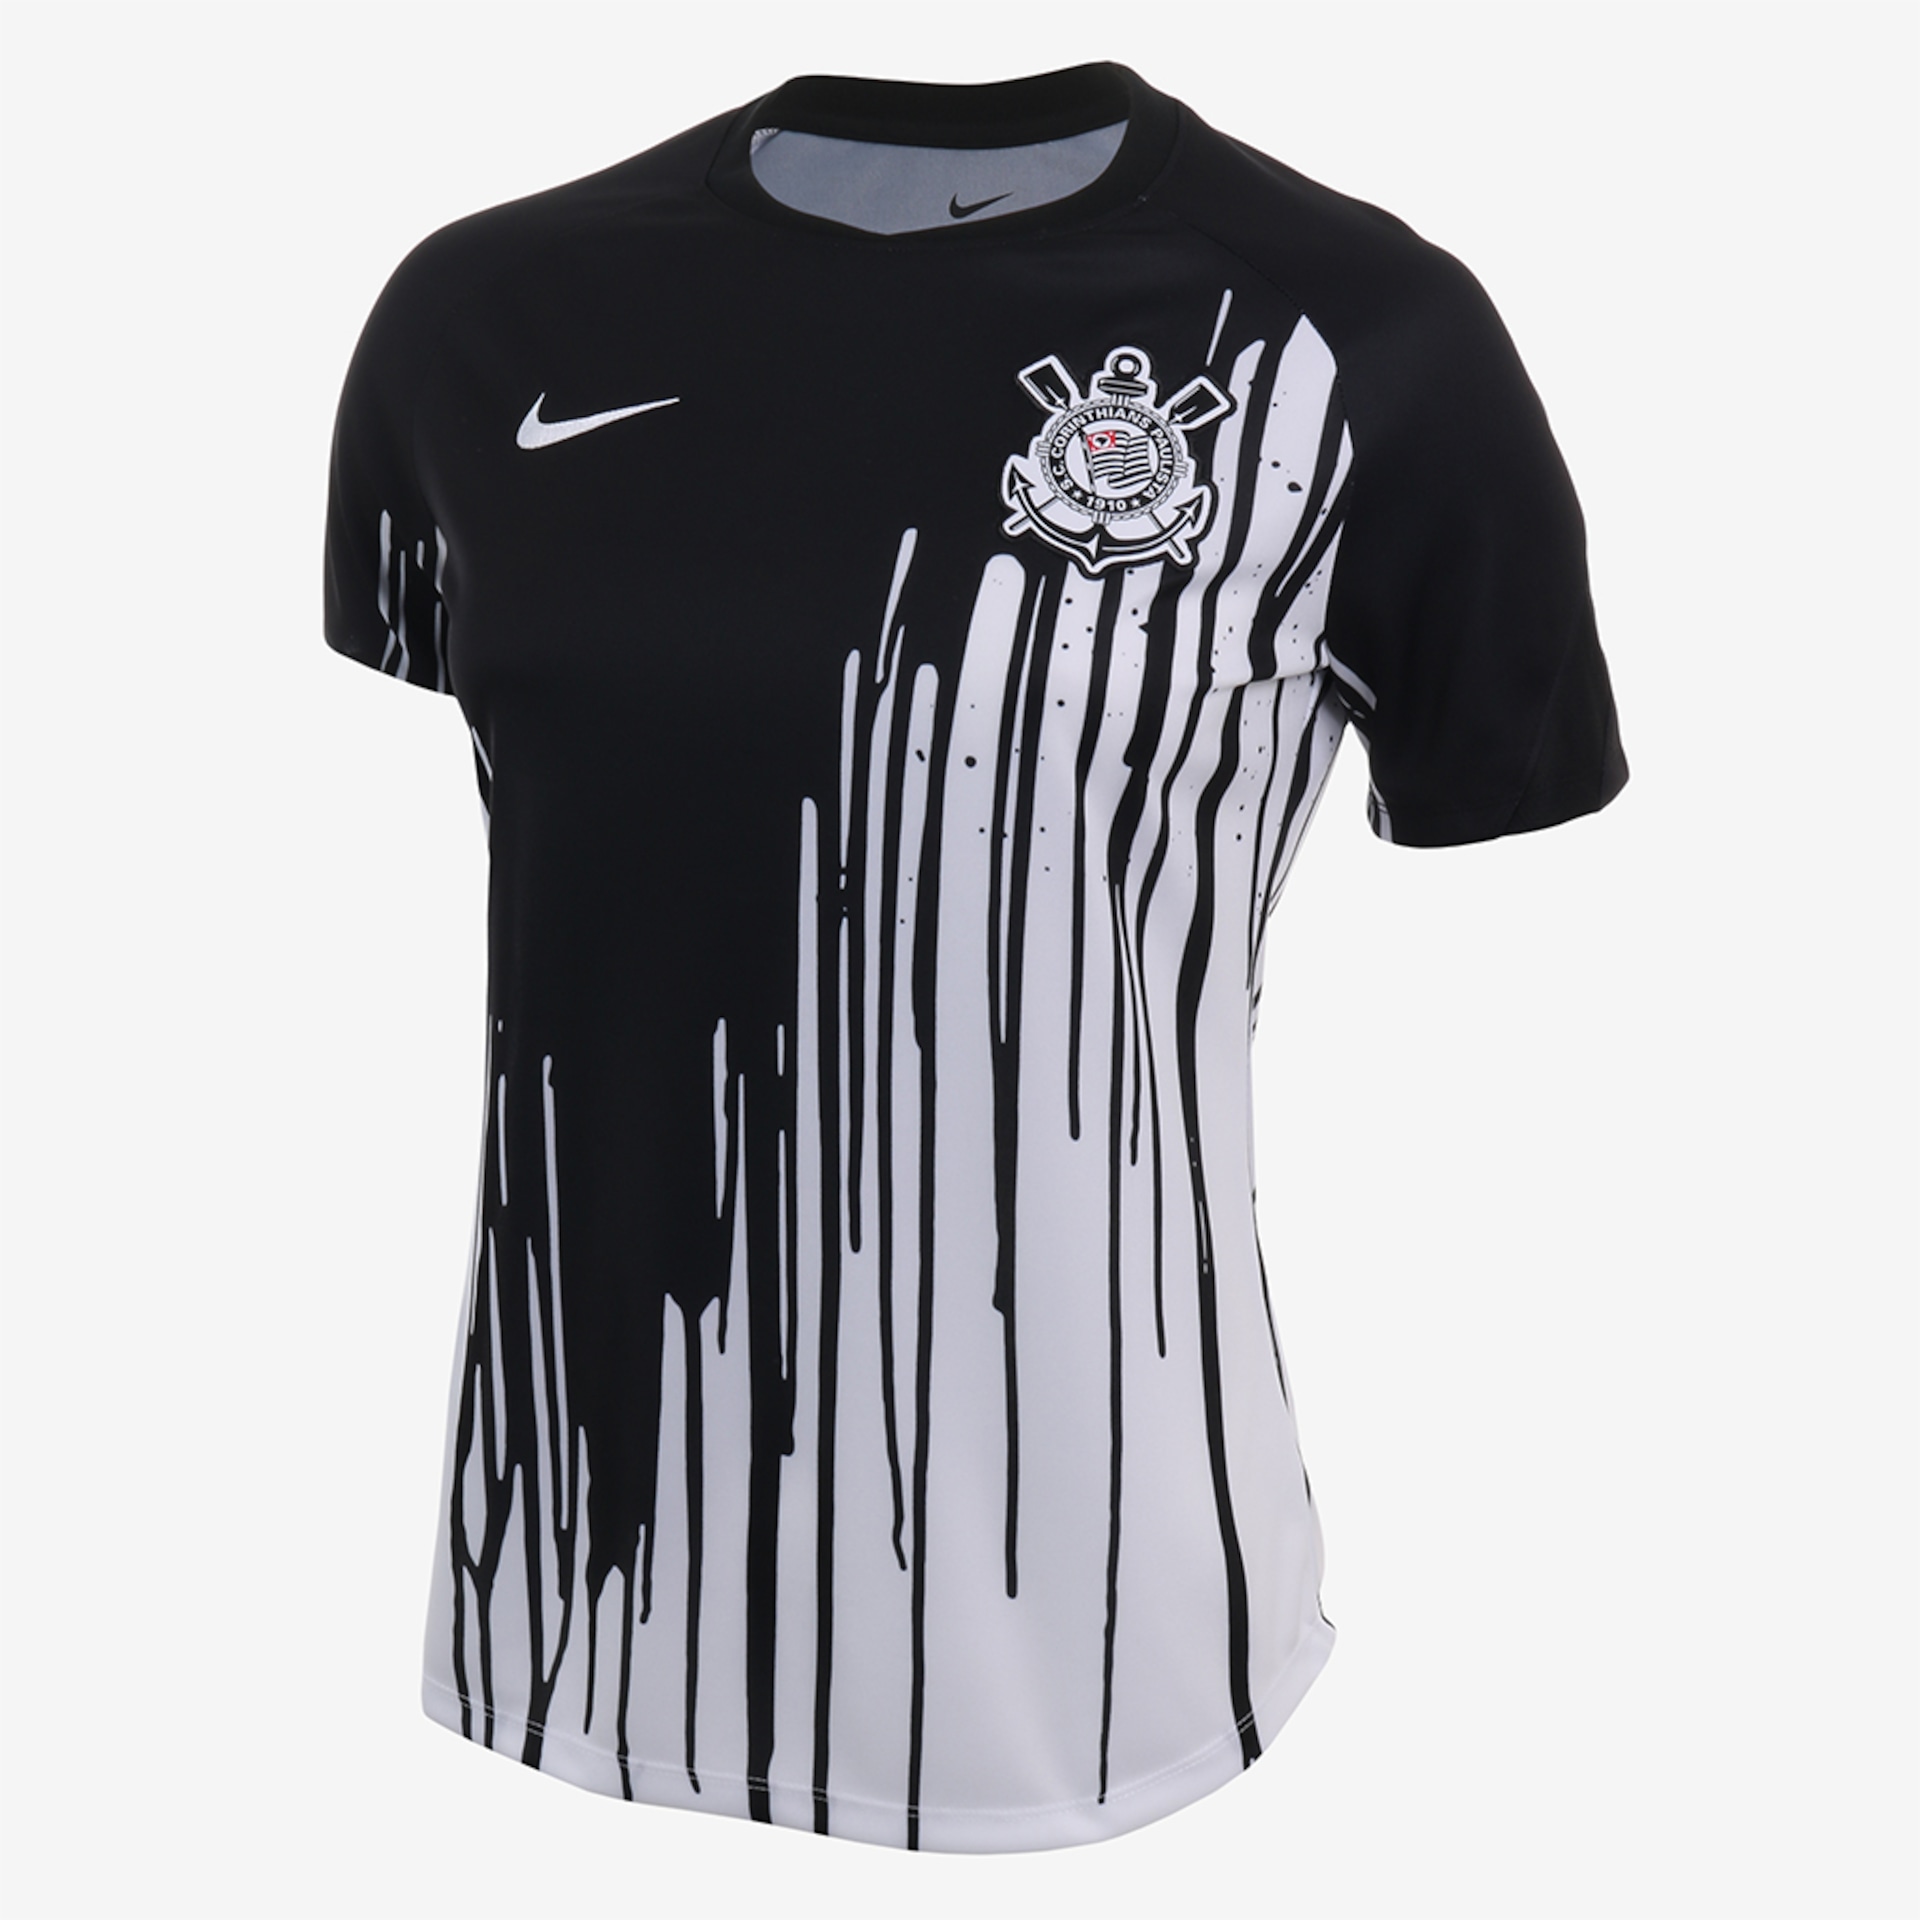 Corinthians t shirt roblox